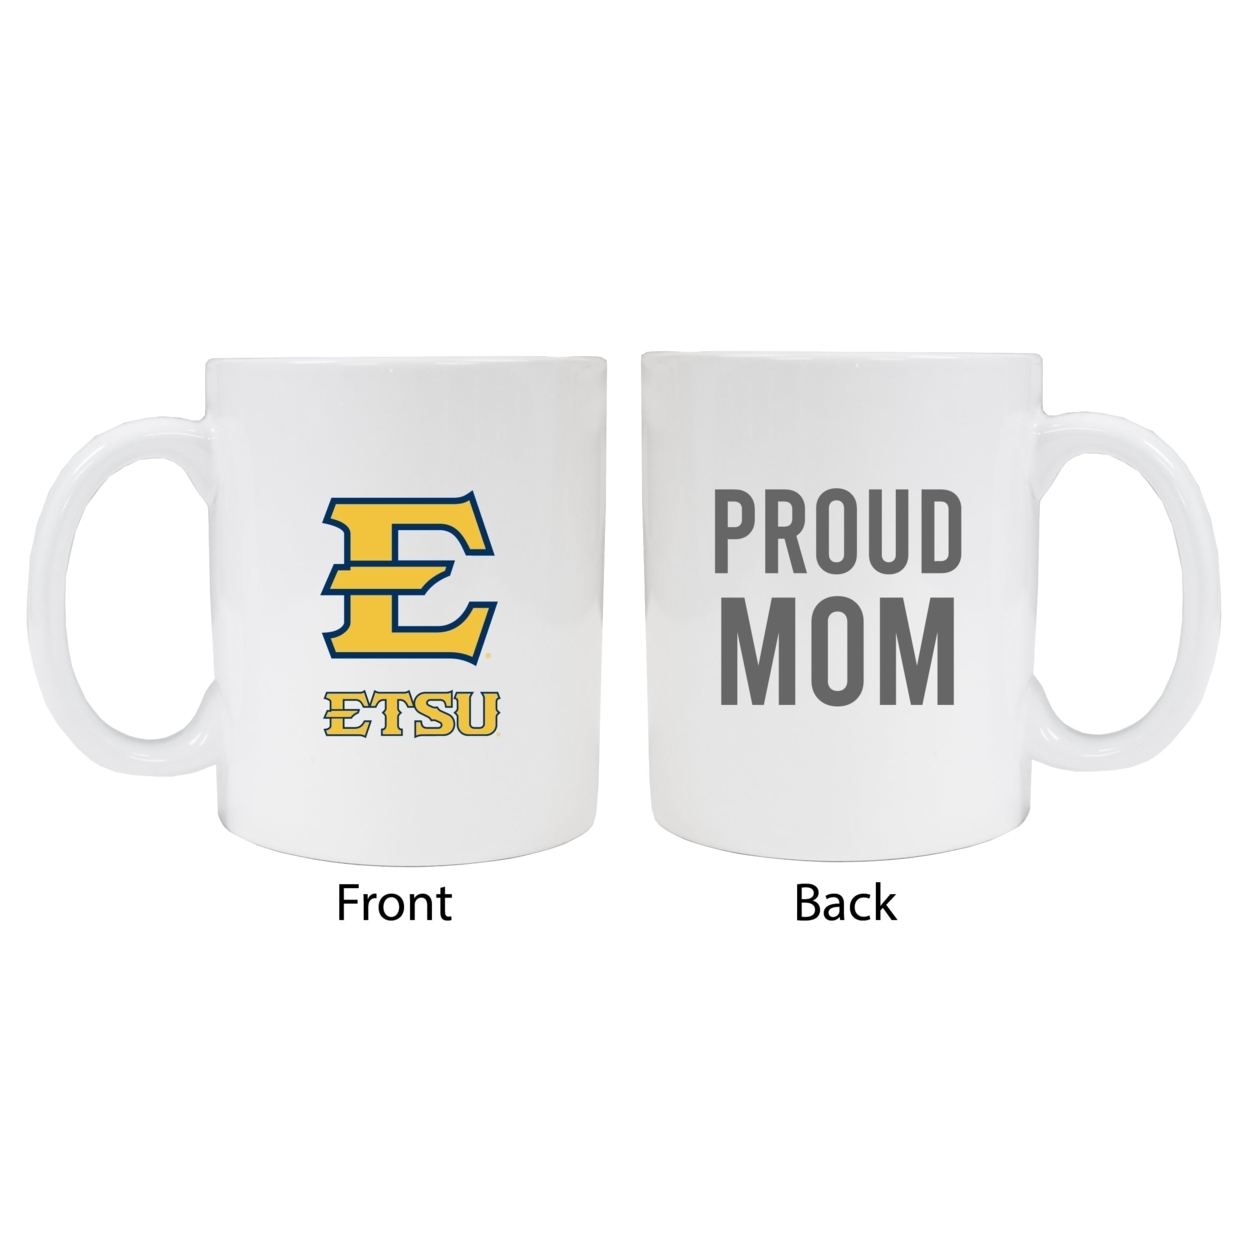 East Tennessee State University Proud Mom Ceramic Coffee Mug - White (2 Pack)